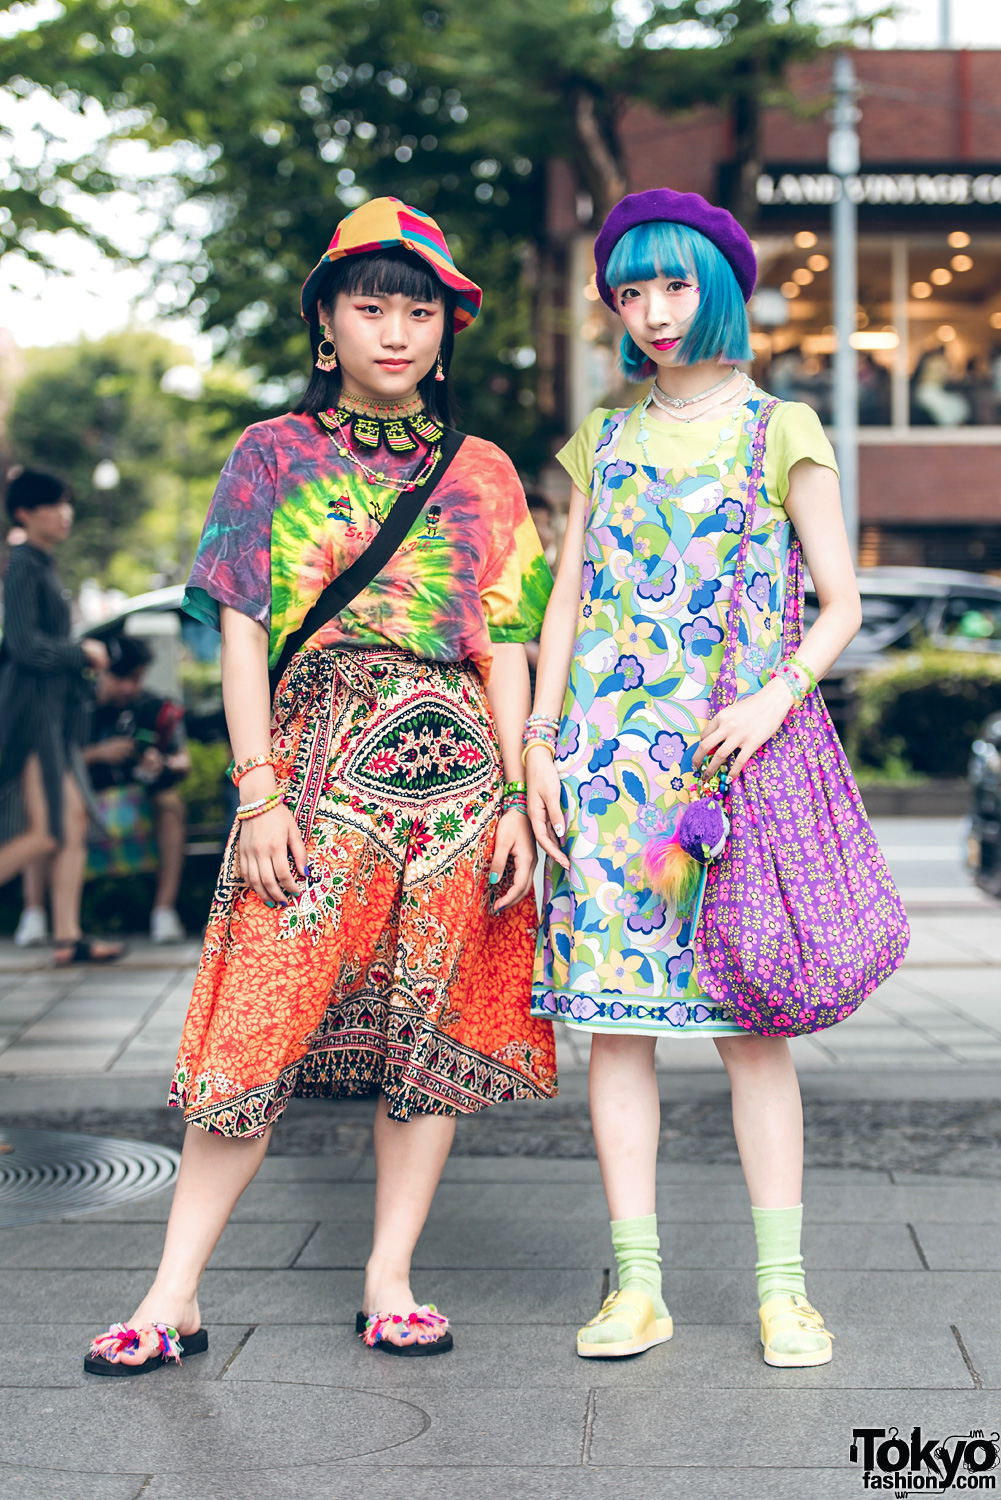 Harajuku Girls in Colorful Vintage Mixed Prints Fashion, Tie Dye & Hats